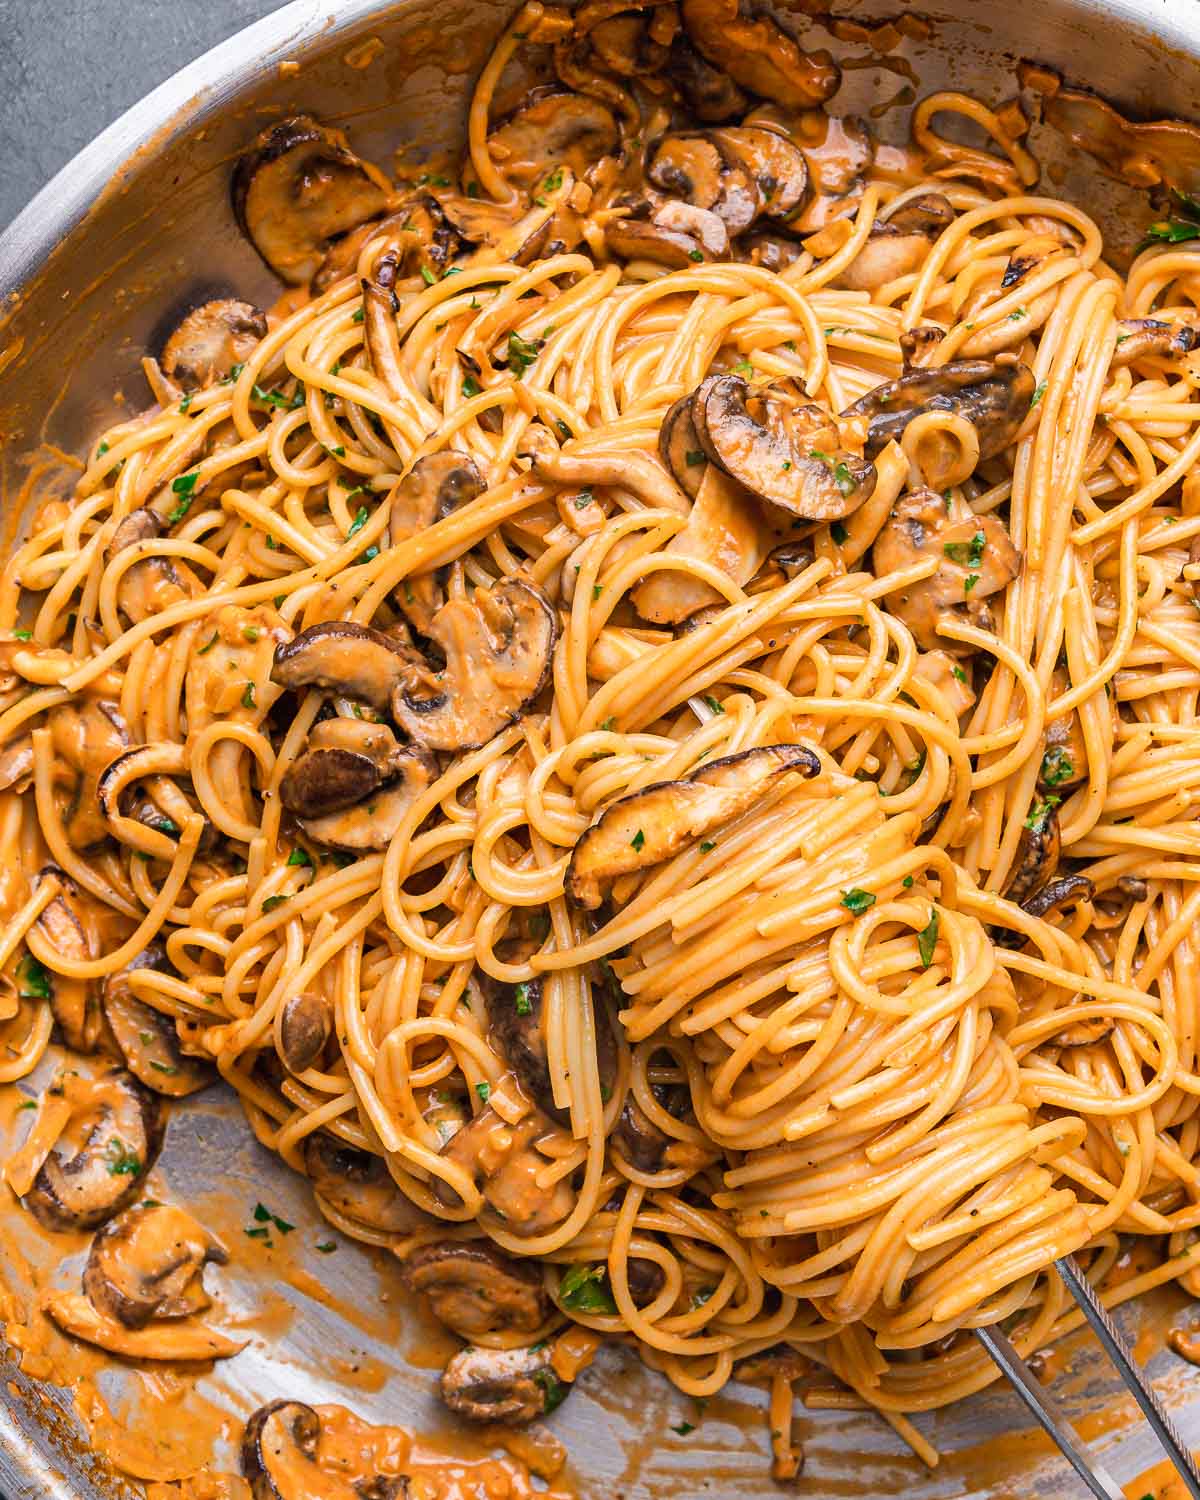 Mushroom brandy cream sauce spaghetti twirled in pan with pasta tweezers.